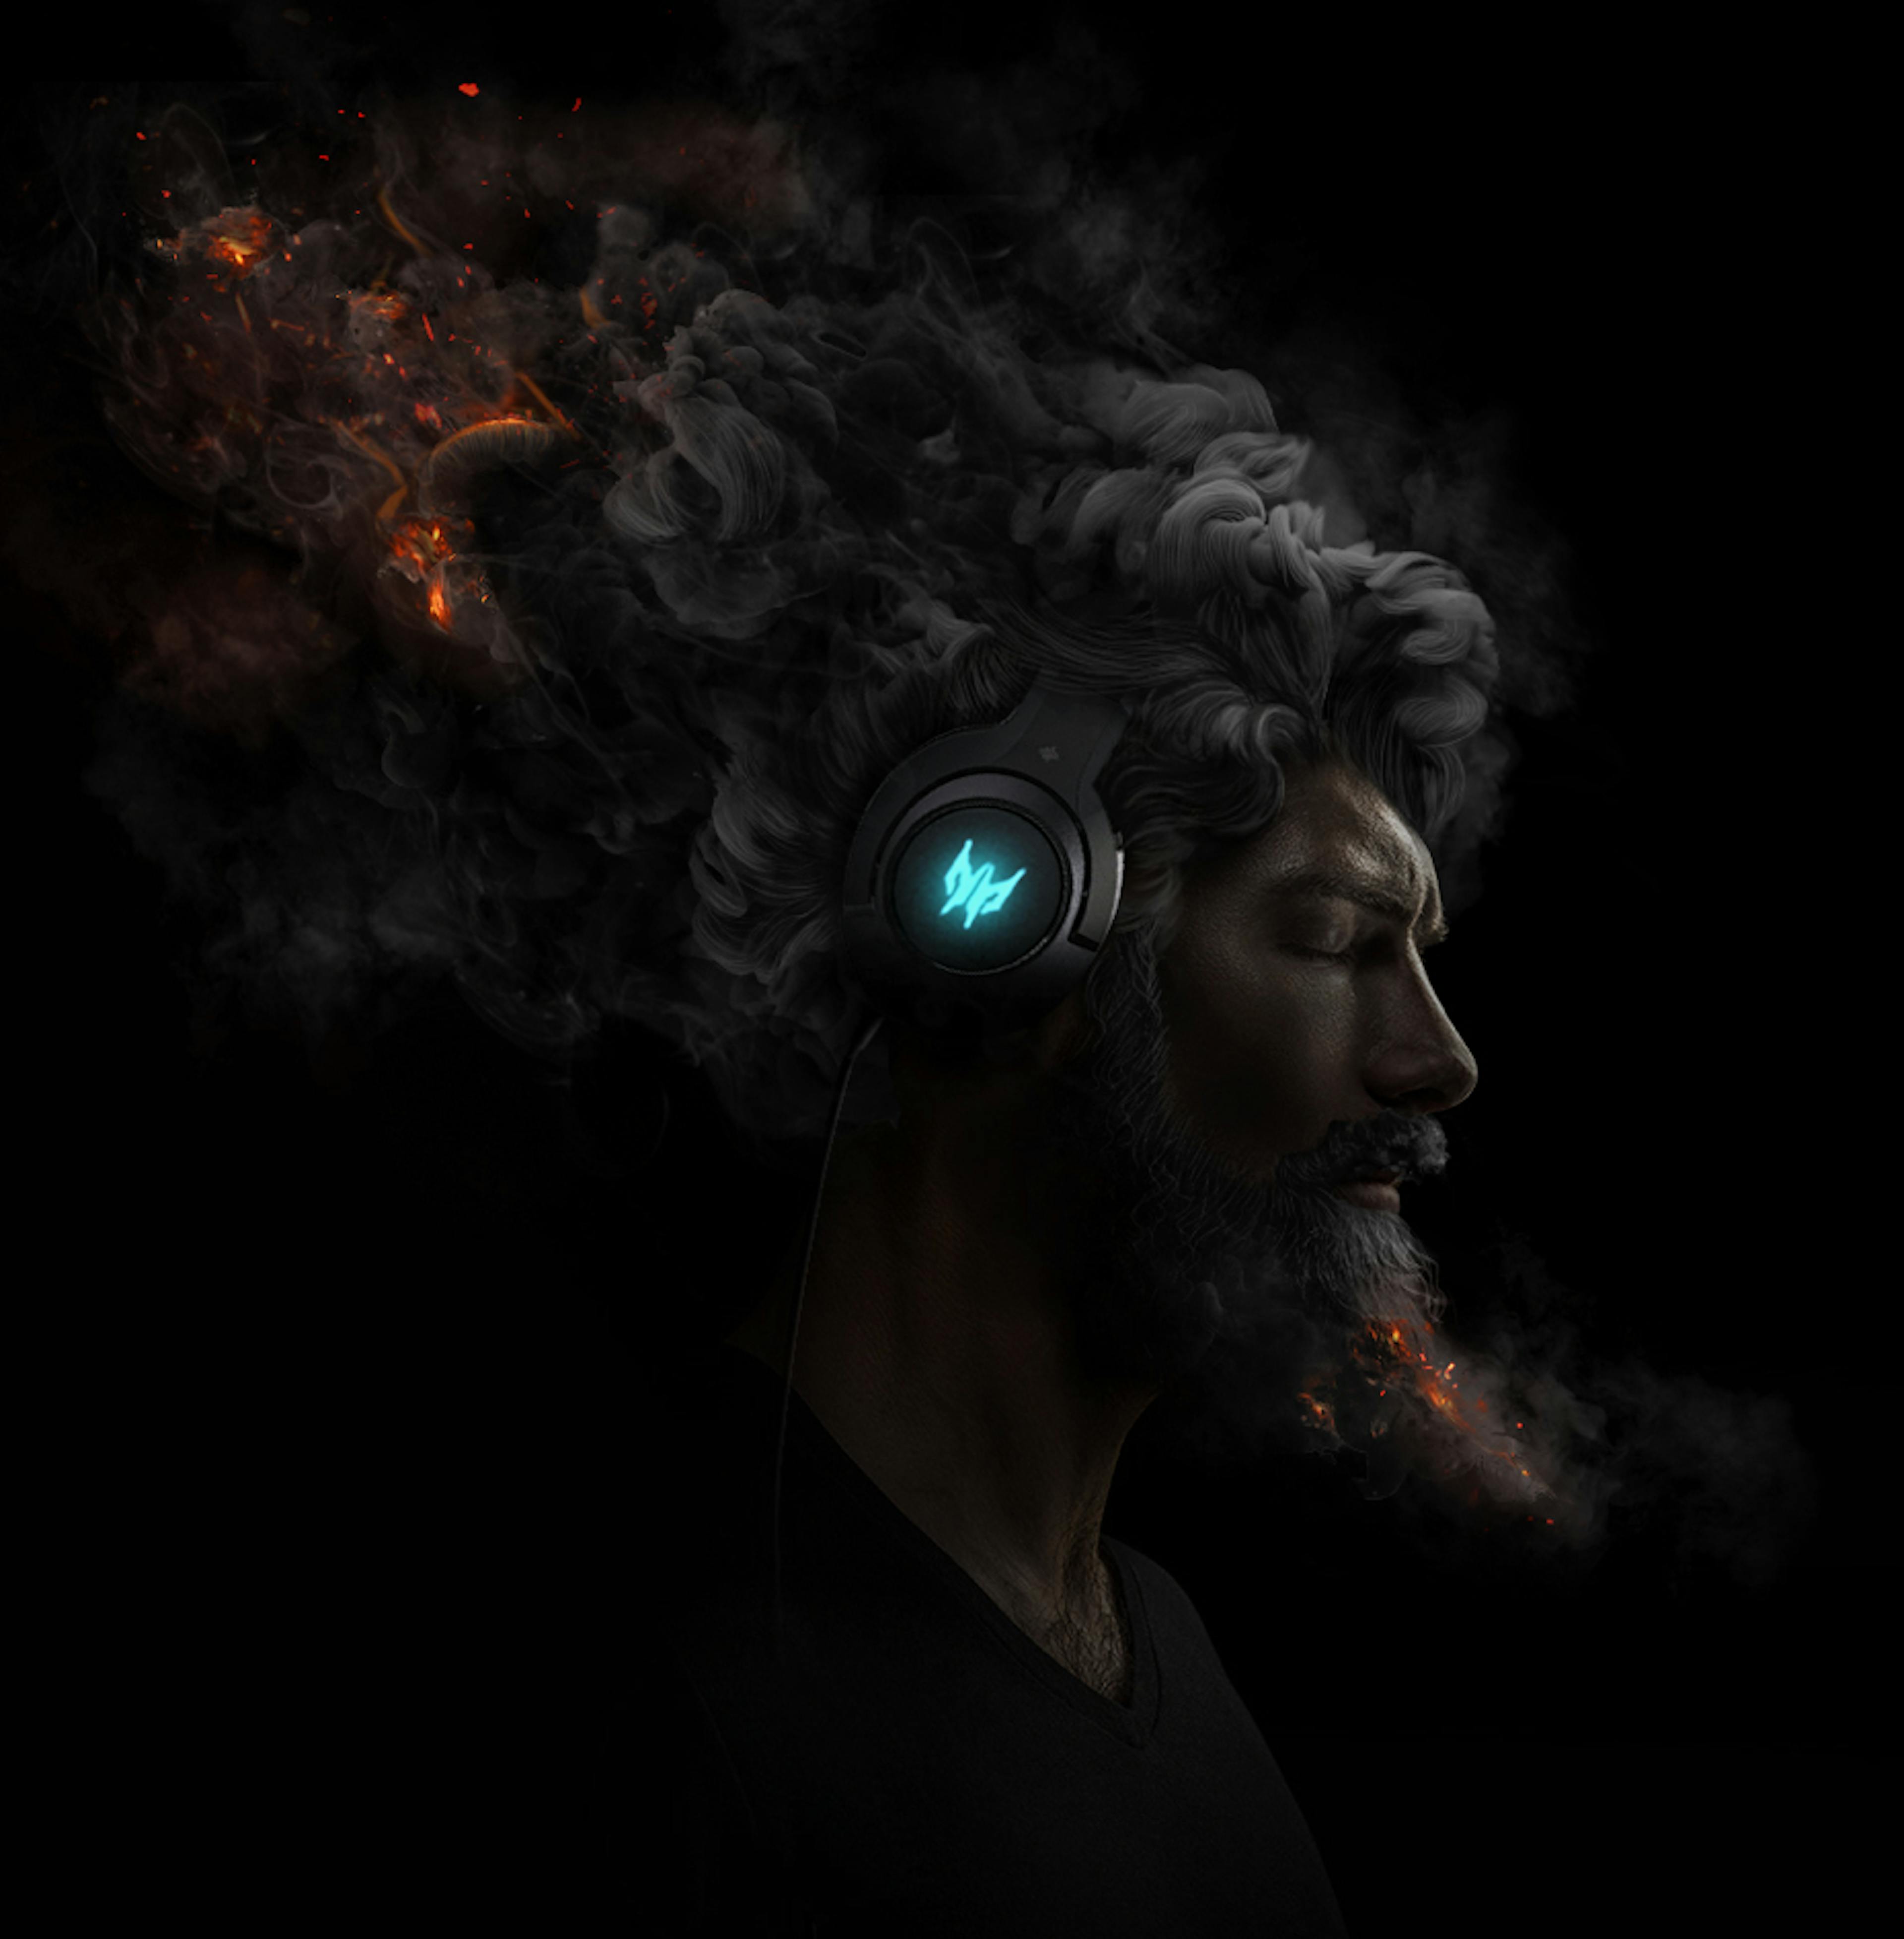 Dark image of man wearing headphones